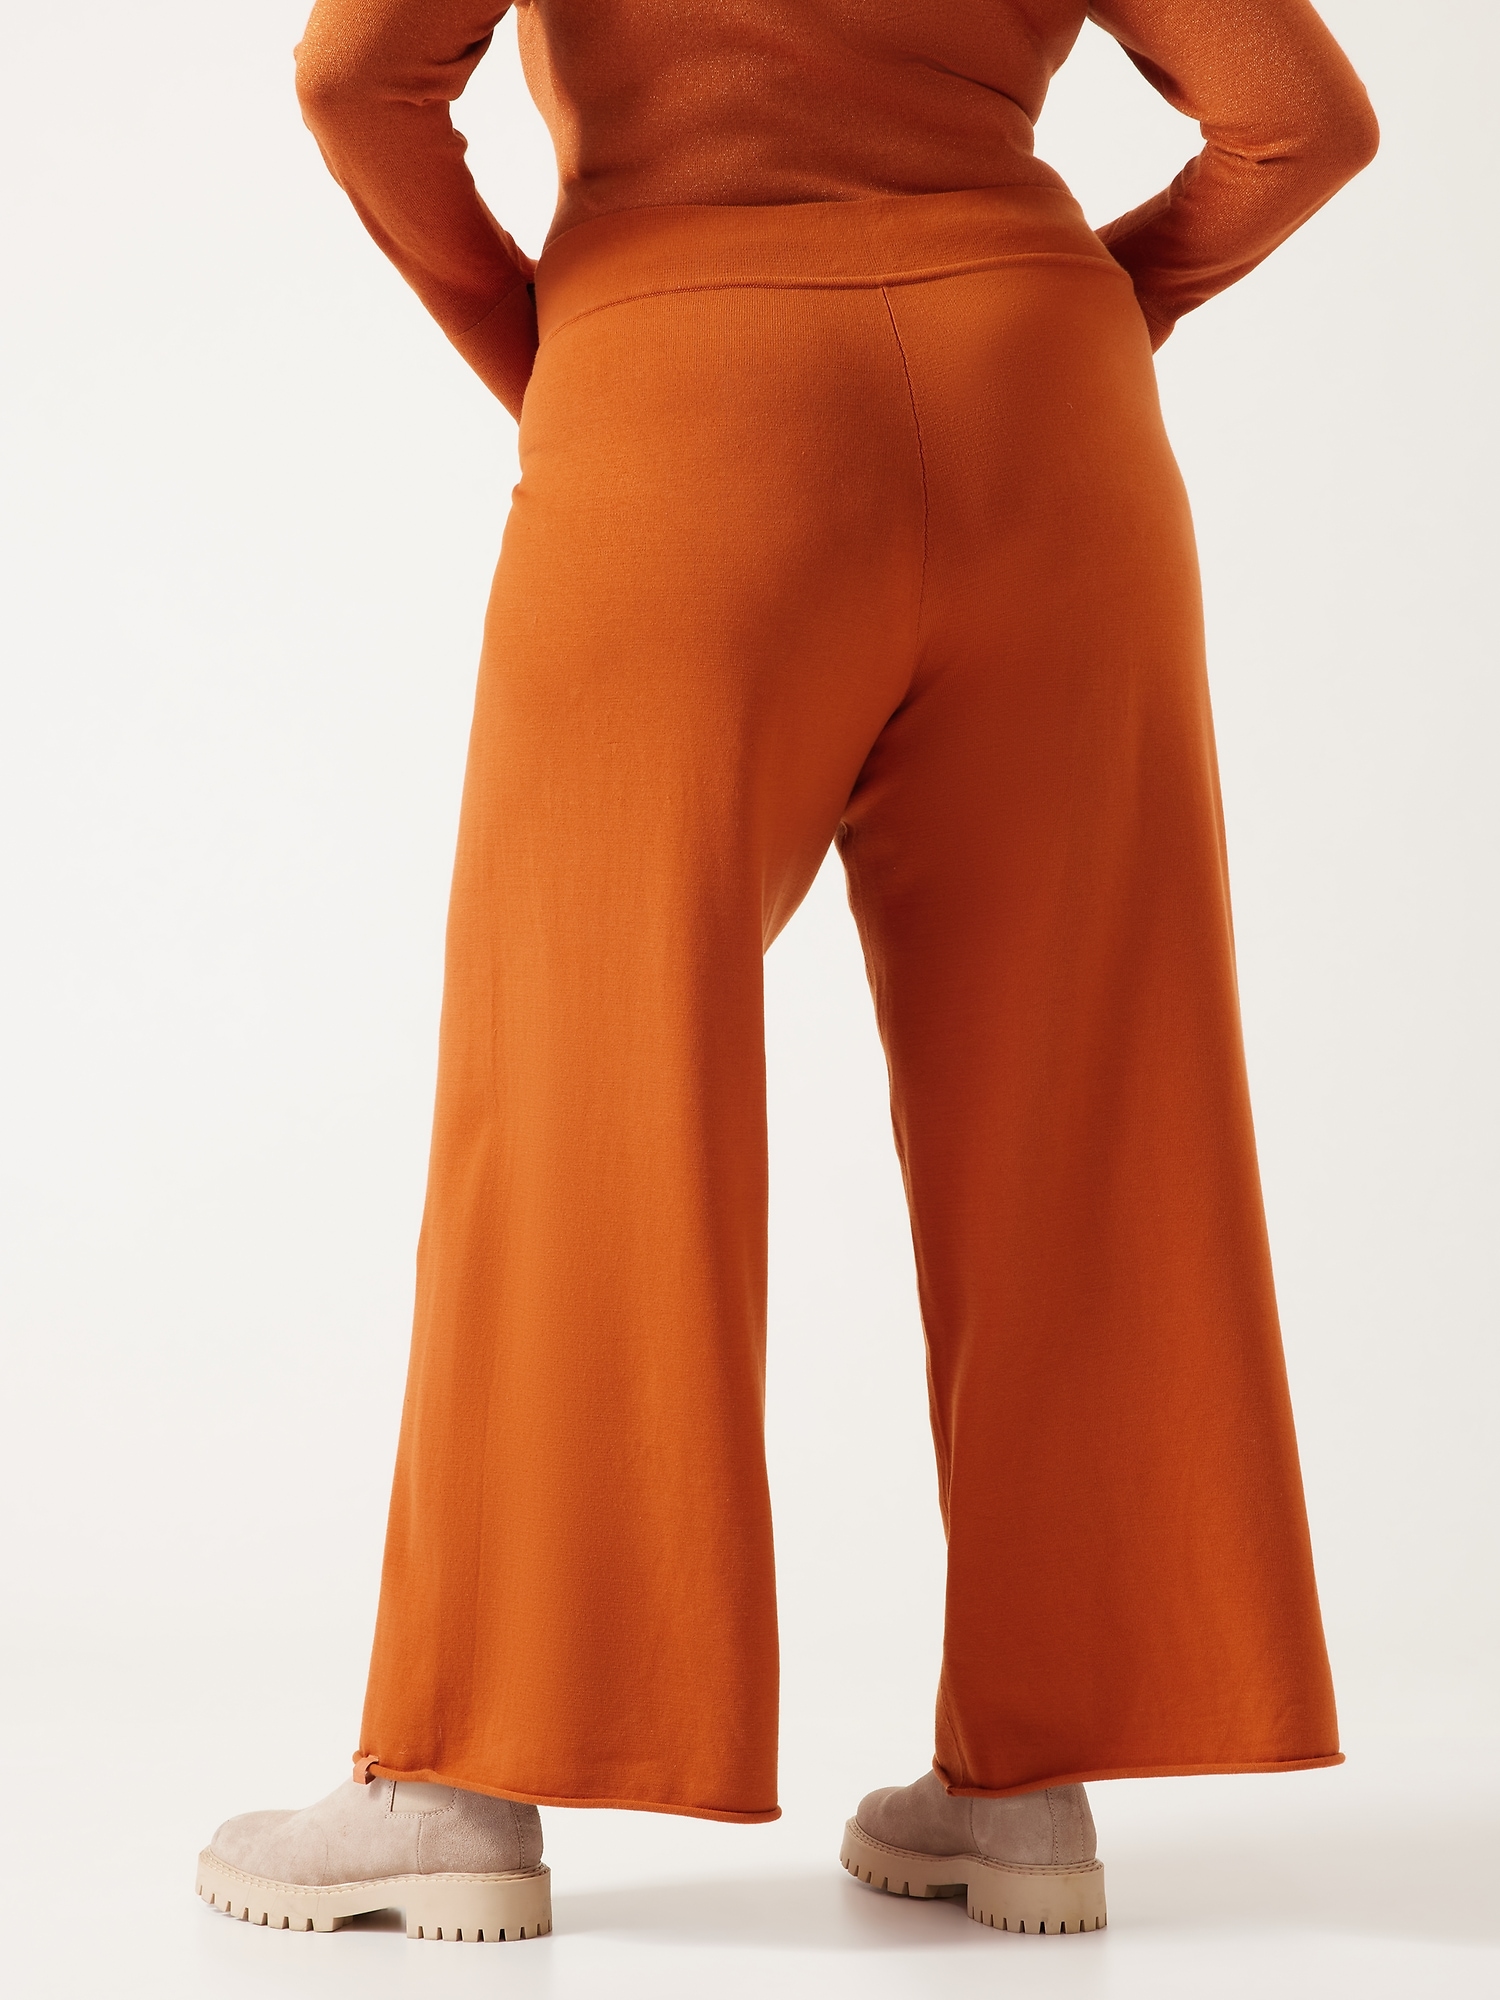 Athleta x Alicia Keys Women Orange Active Leggings Pants Small Halloween  Fall